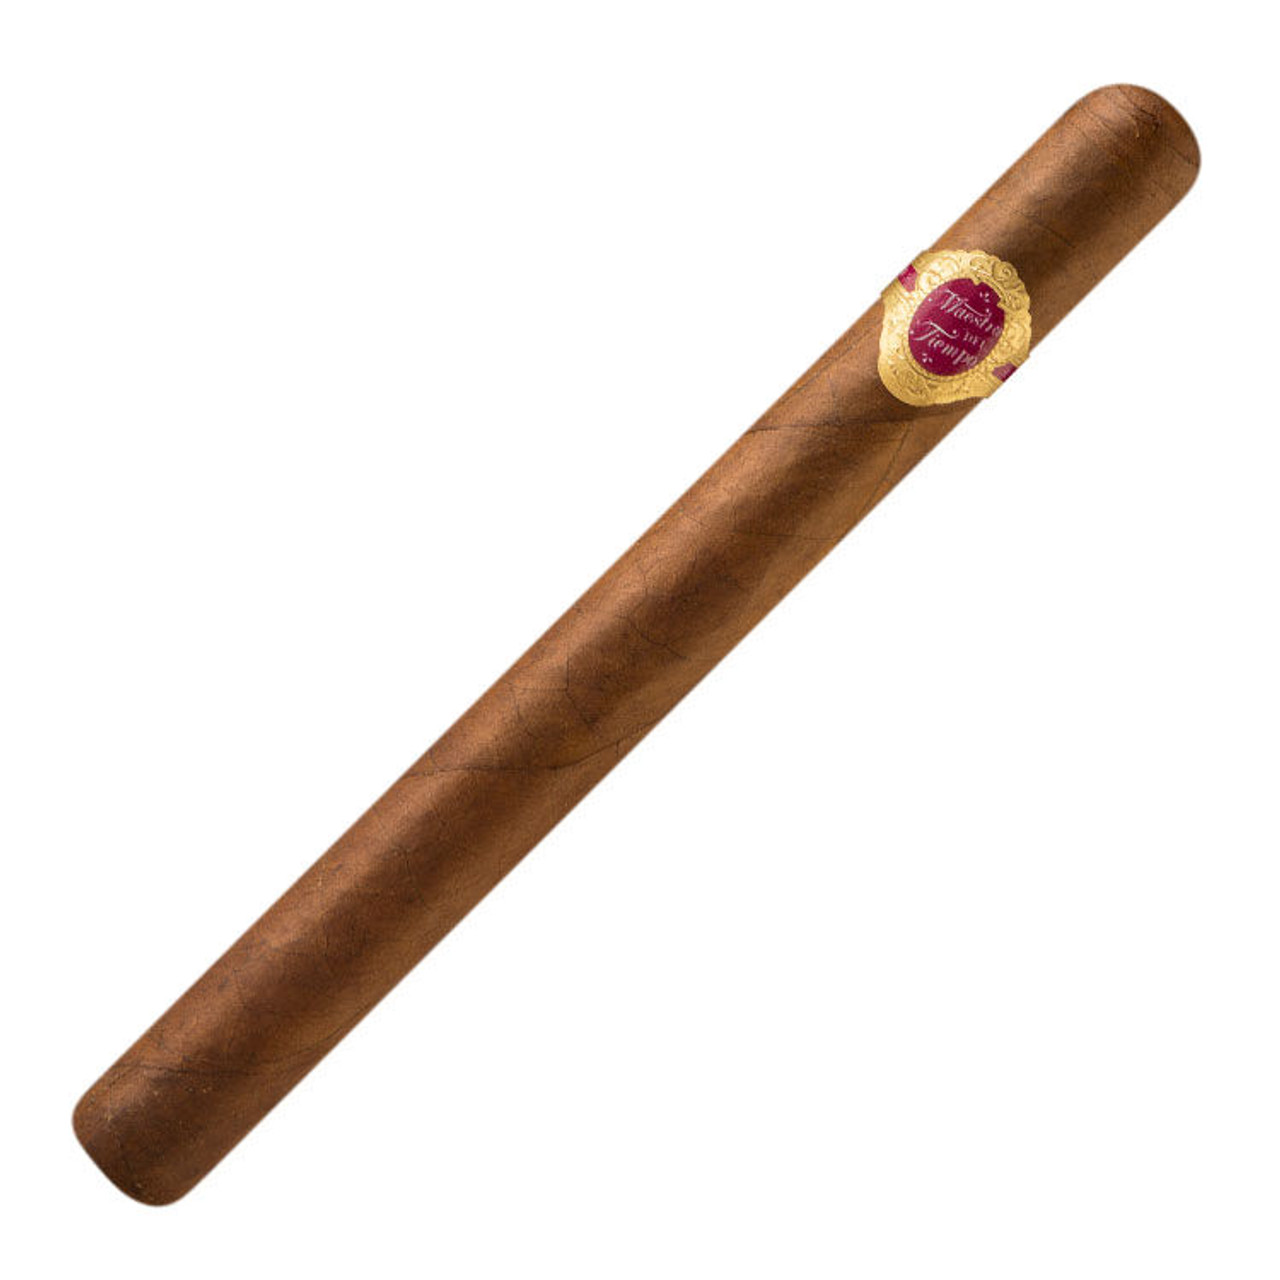 Warped Maestro del Tiempo 5205 Cigars - 6.375 x 42 (Pack of 5)